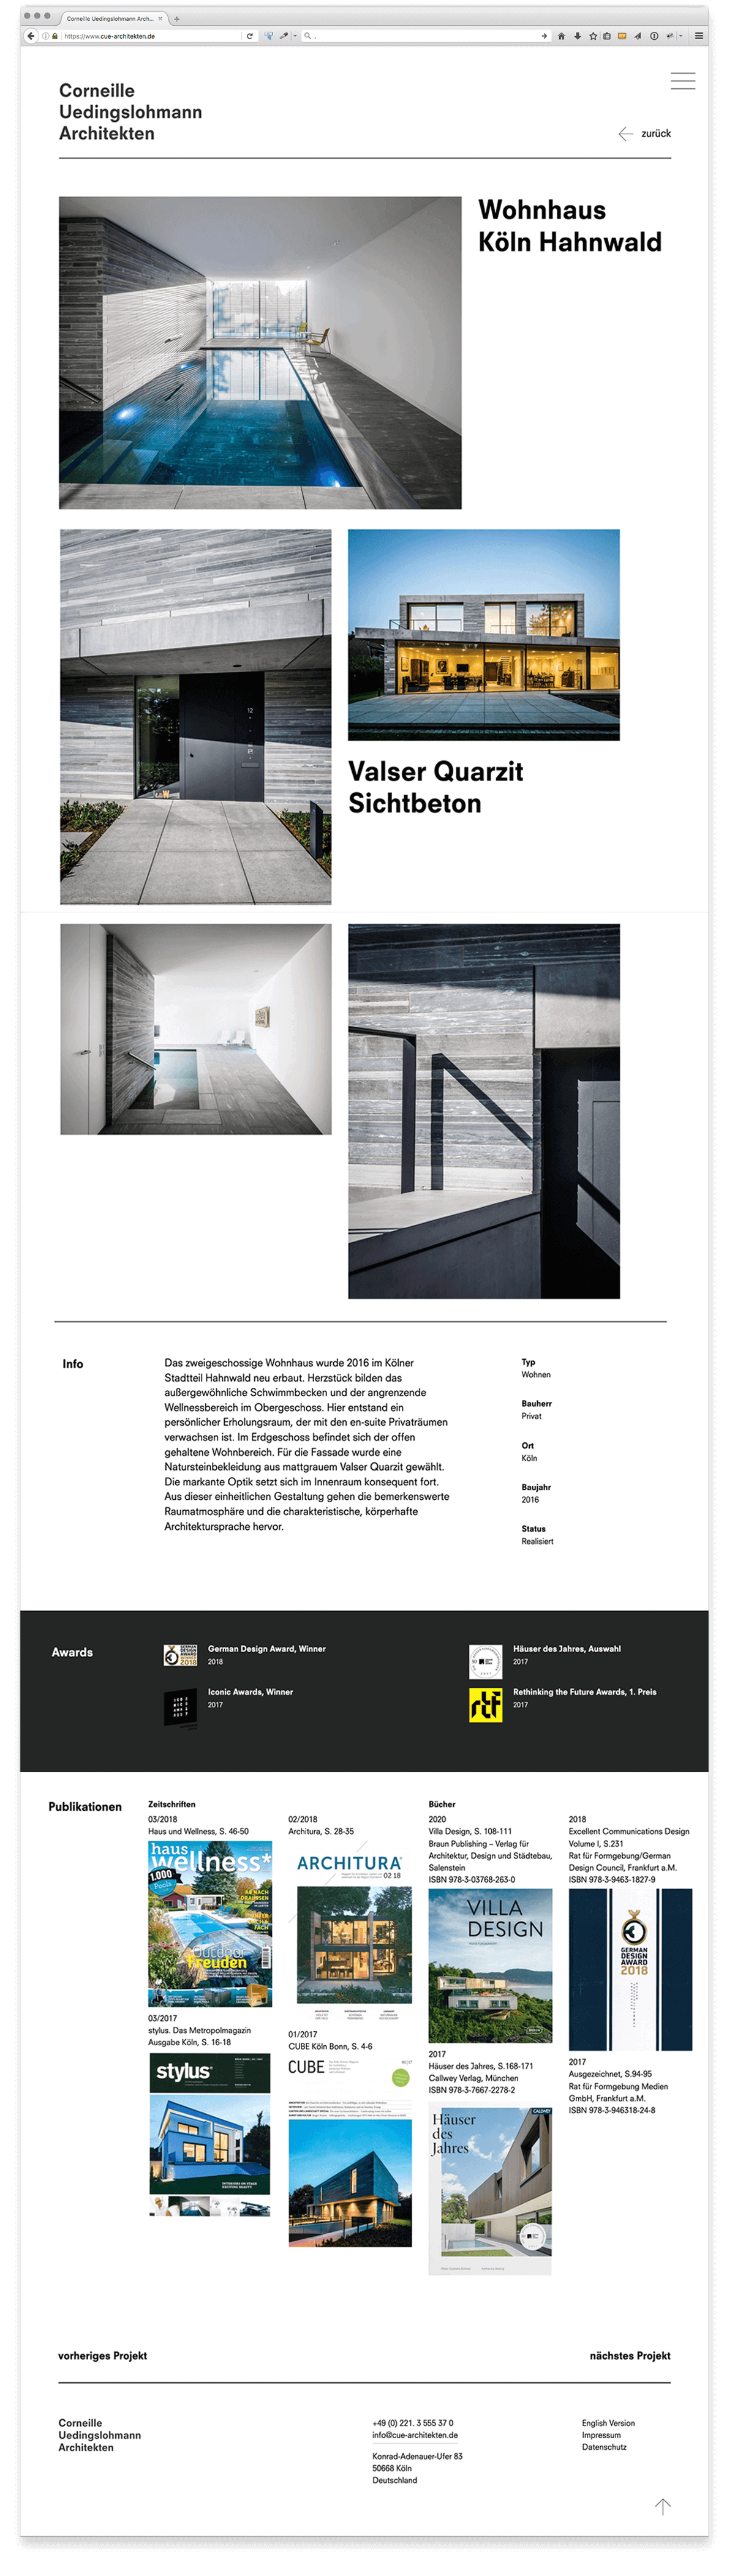 Corneille Uedingslohmann Architekten Webdesign Seite komplett